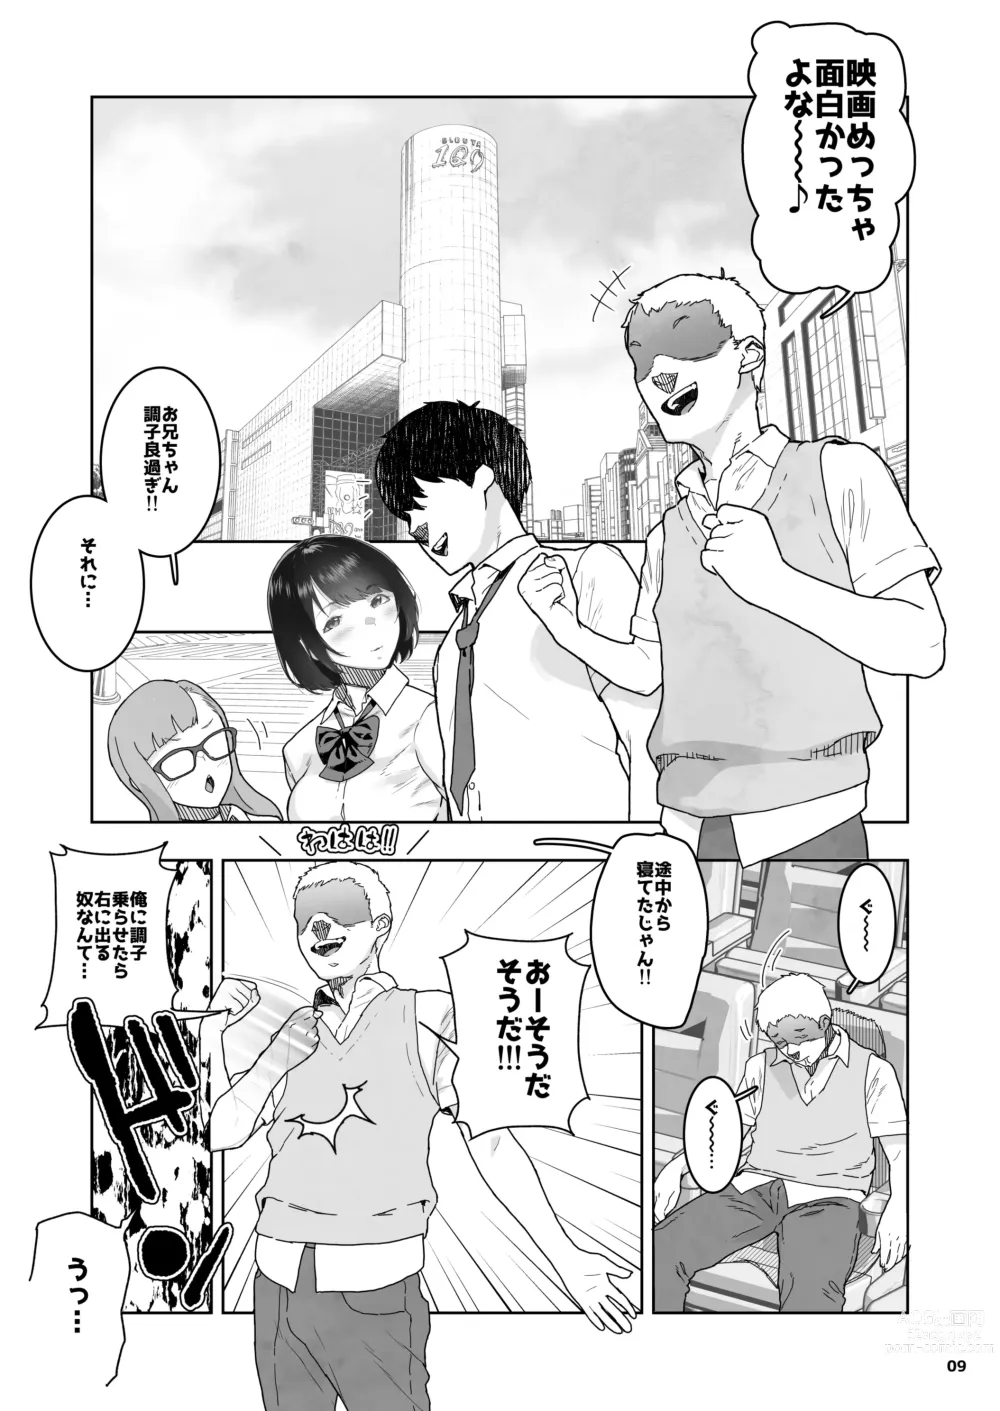 Page 9 of doujinshi Tomodachi no Shuwari